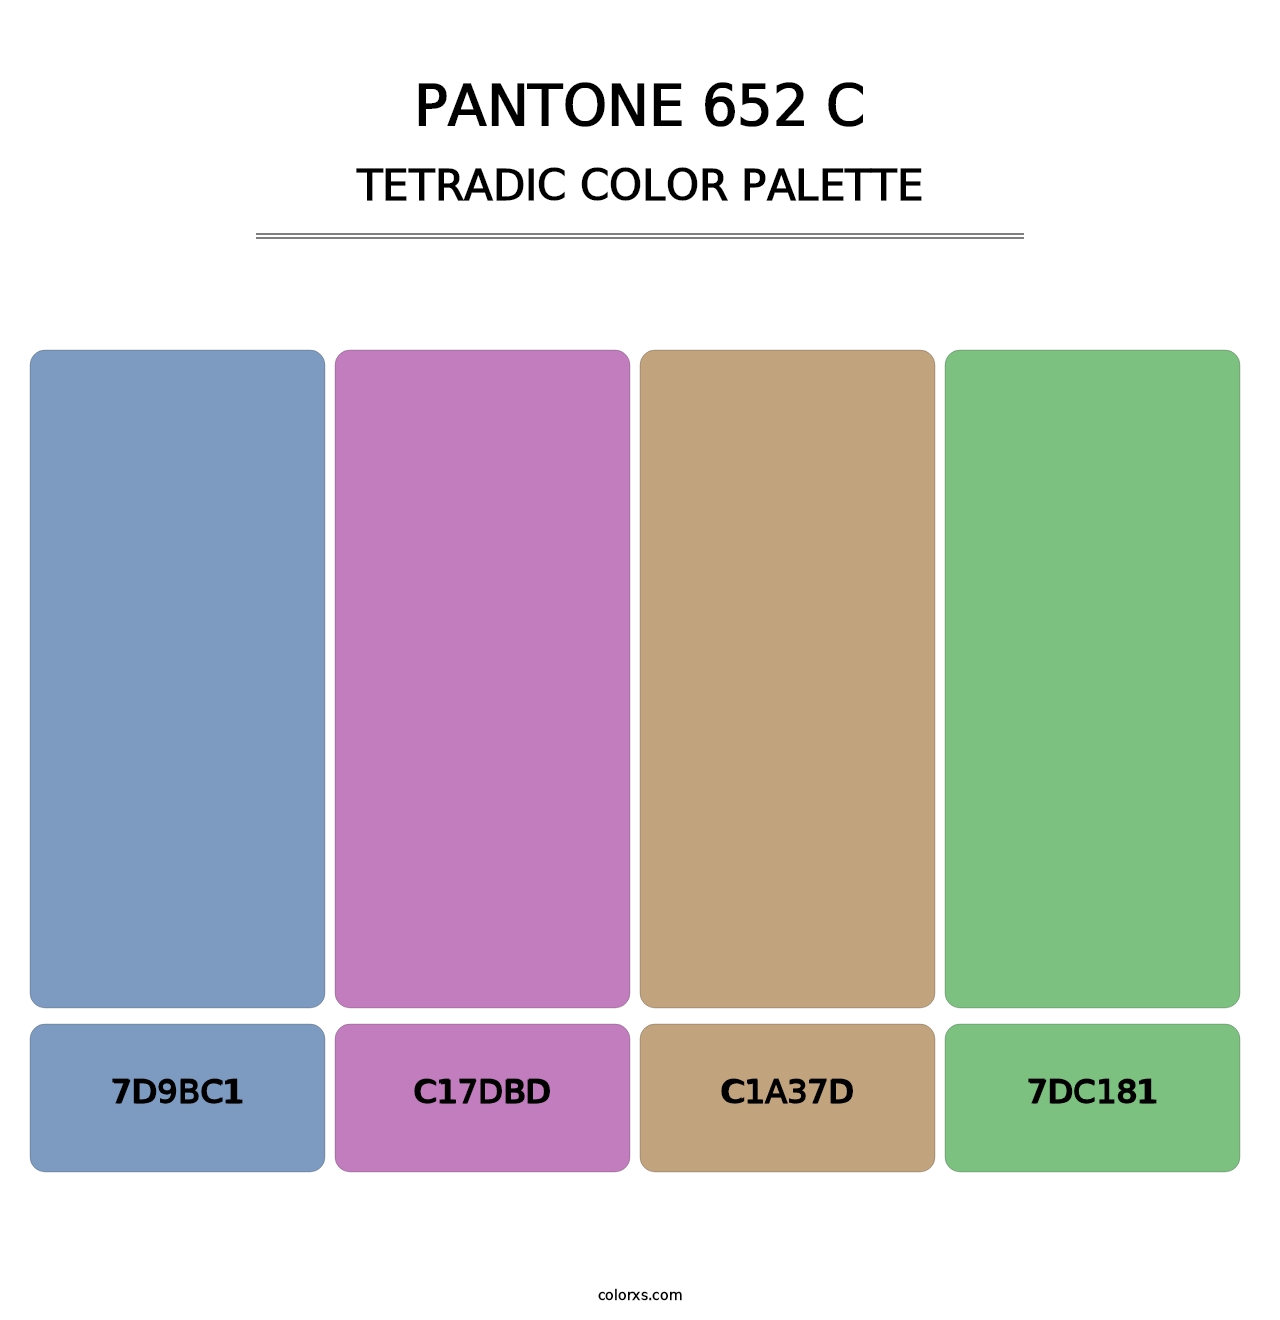 PANTONE 652 C - Tetradic Color Palette